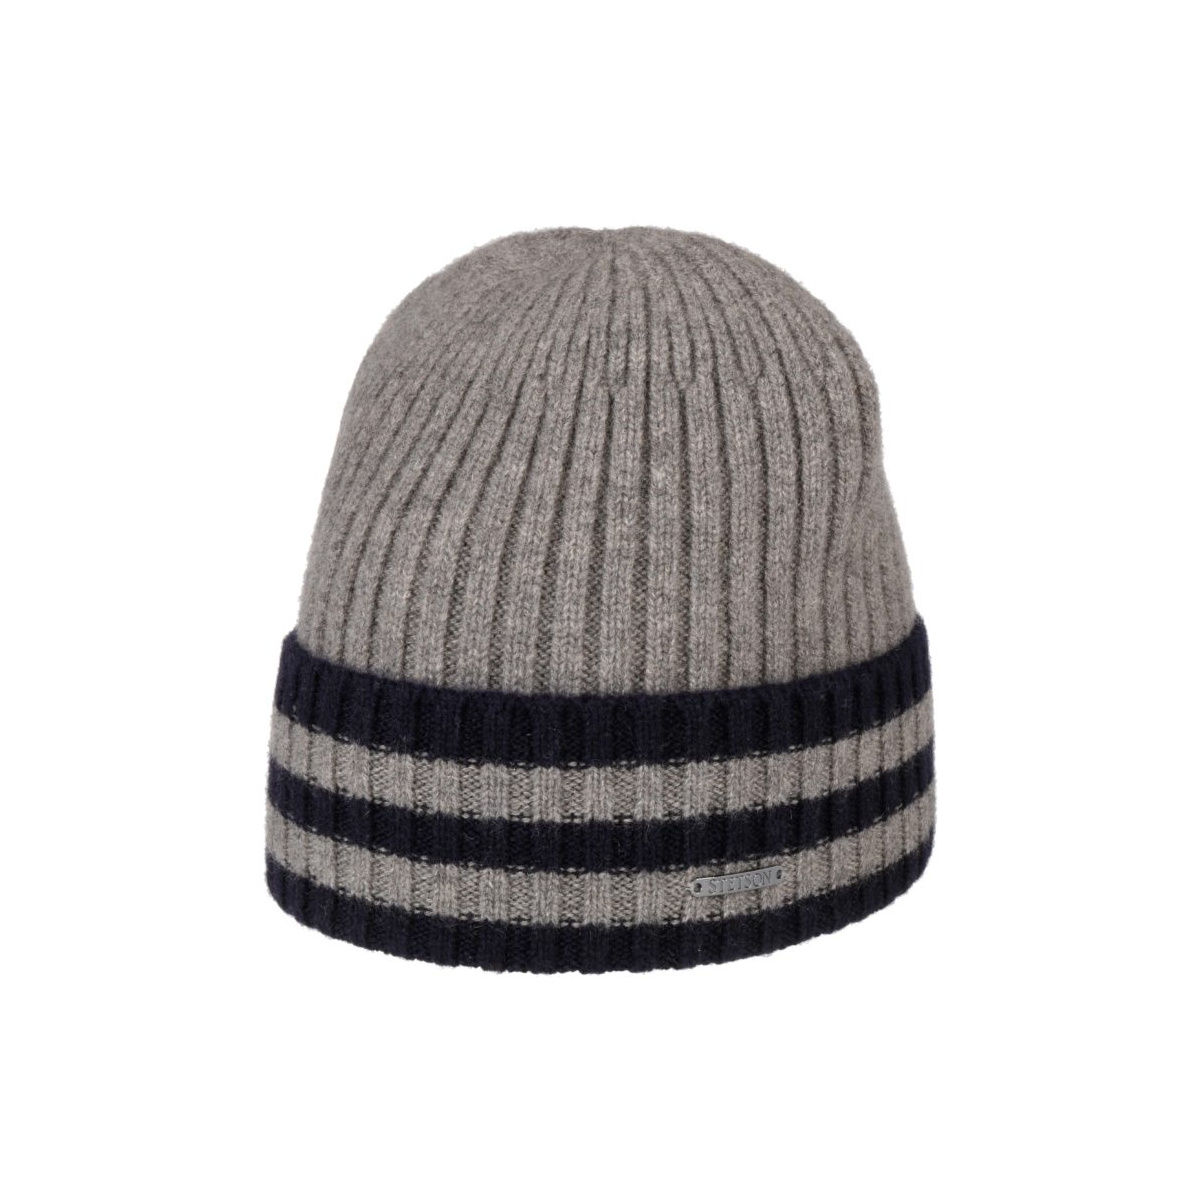 Kendal grey cashmere hat - Stetson